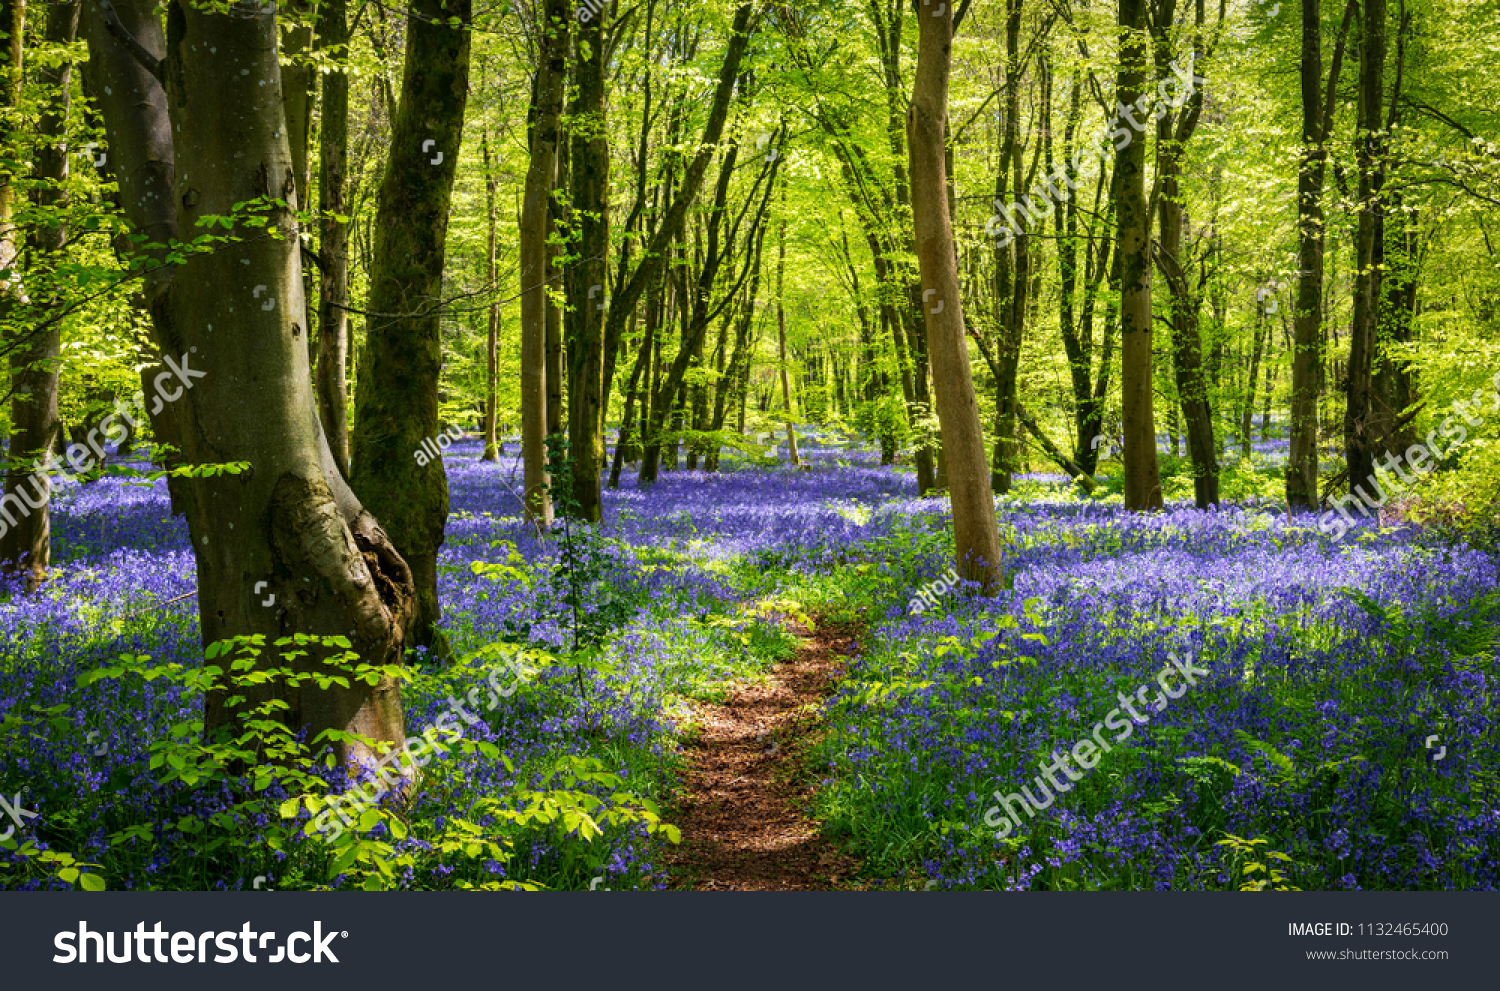 Sun streams through bluebell woods with deep blue purple flowers under a bright green beech canopy #1132465400